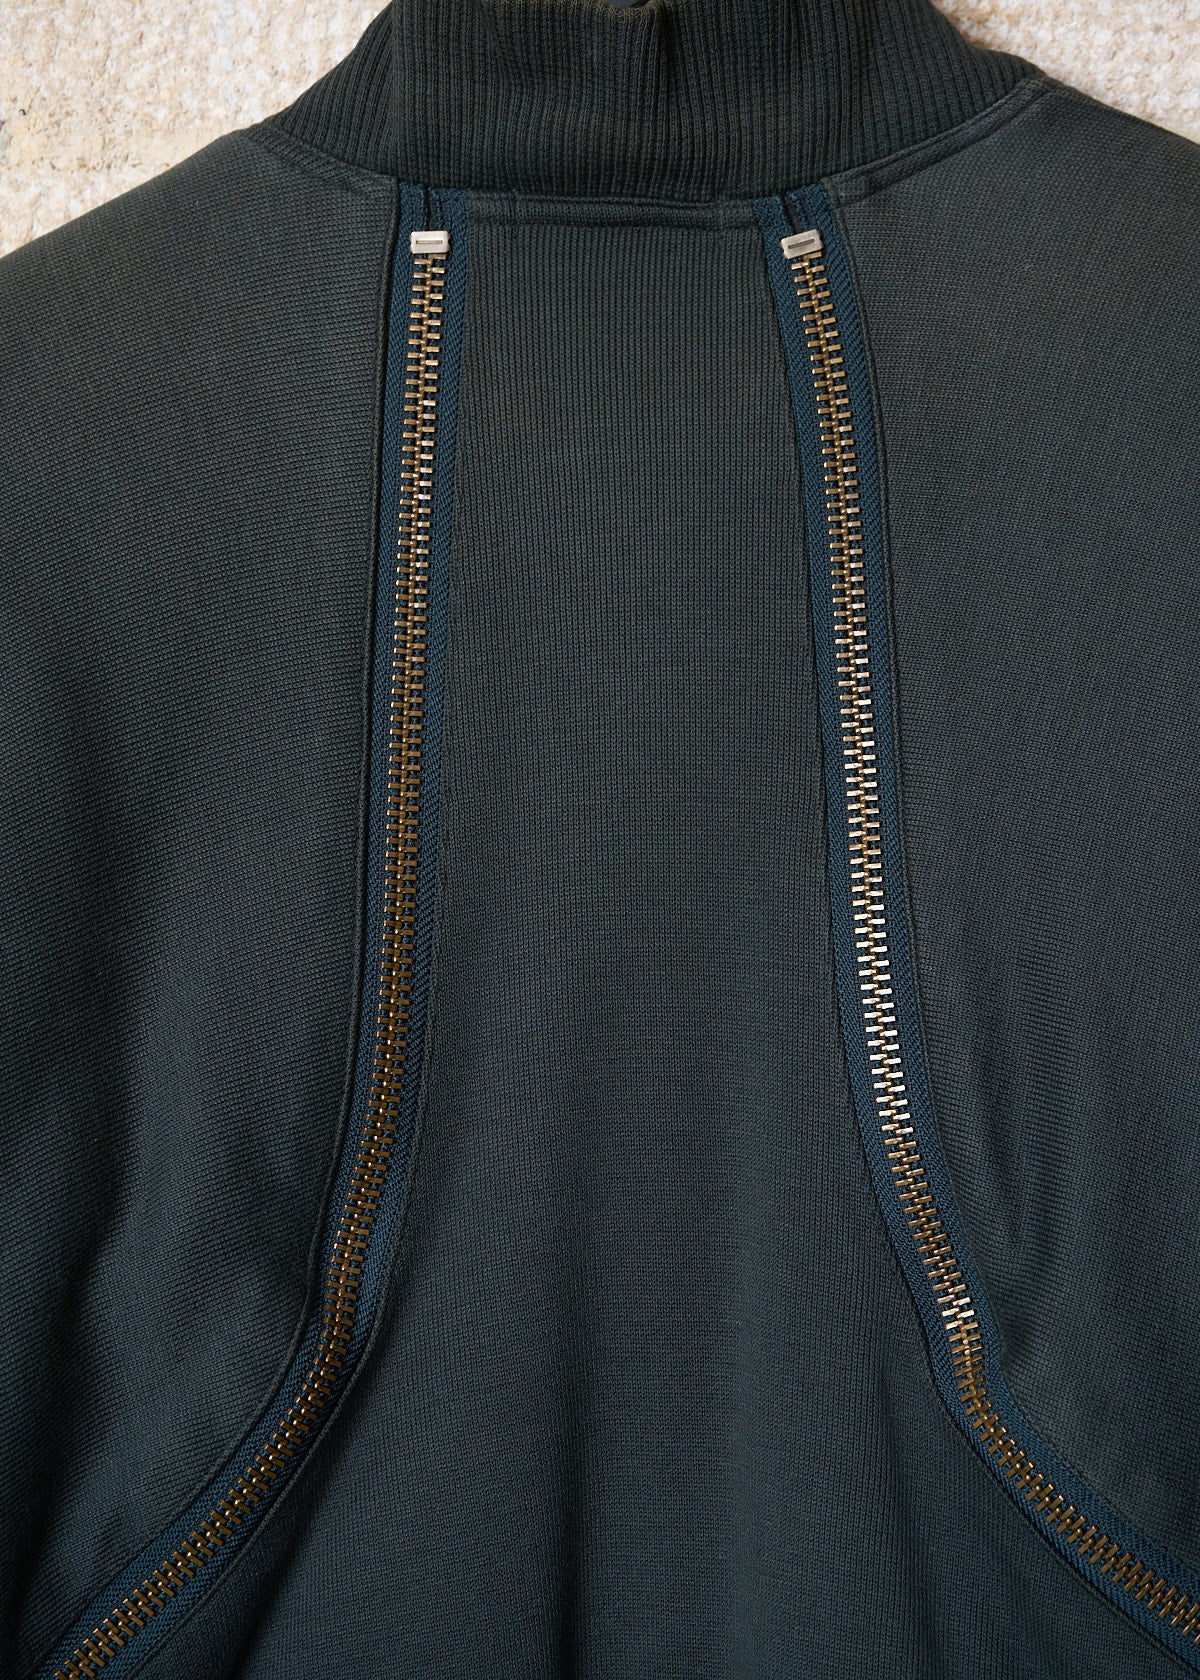 Black Dual Zip Heavy Cotton Jacket 1980's - Medium